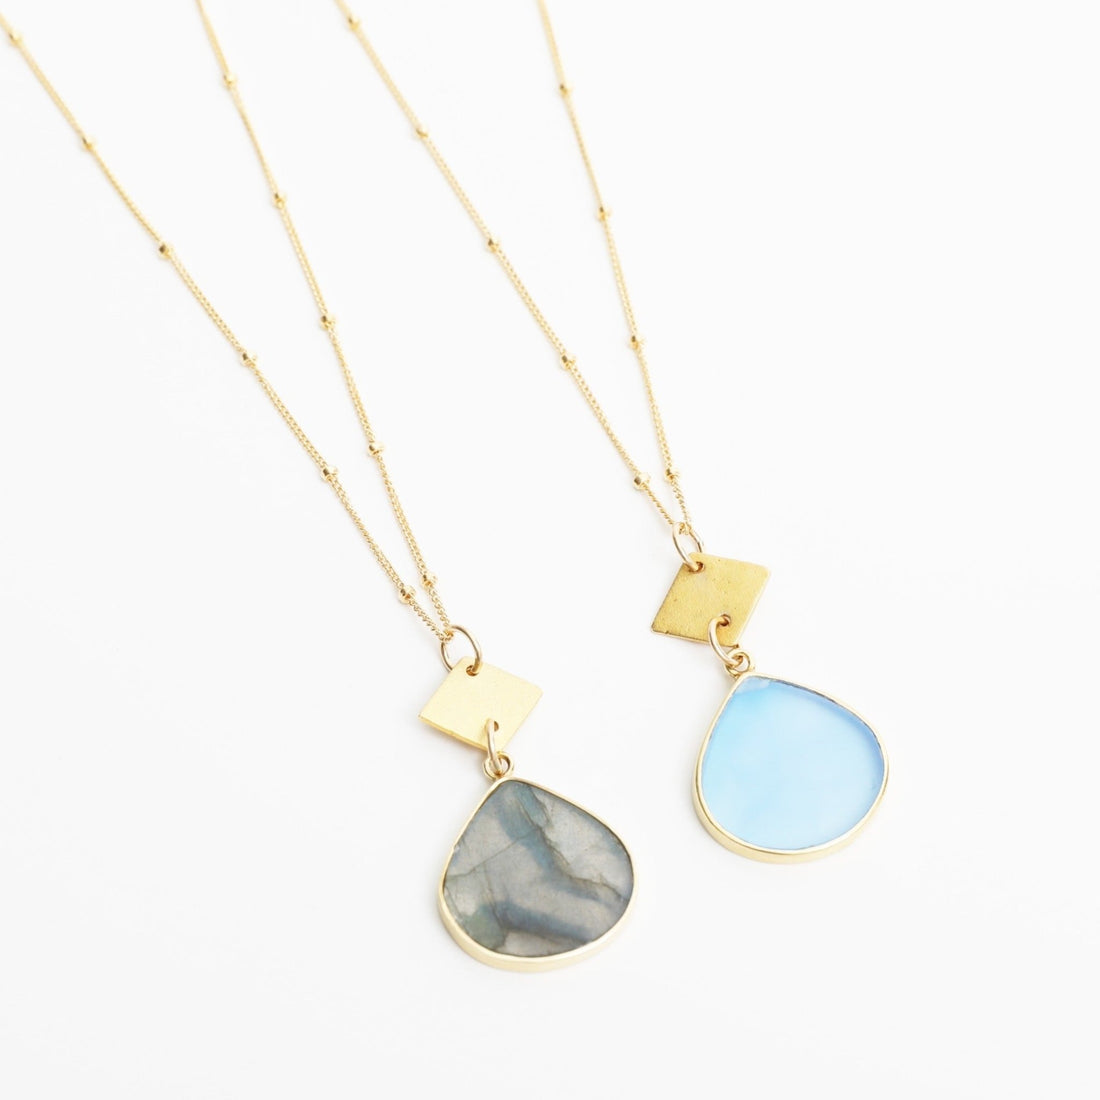 Eleos Diamond Necklace with Teardrop Stone - Chocolate and Steel